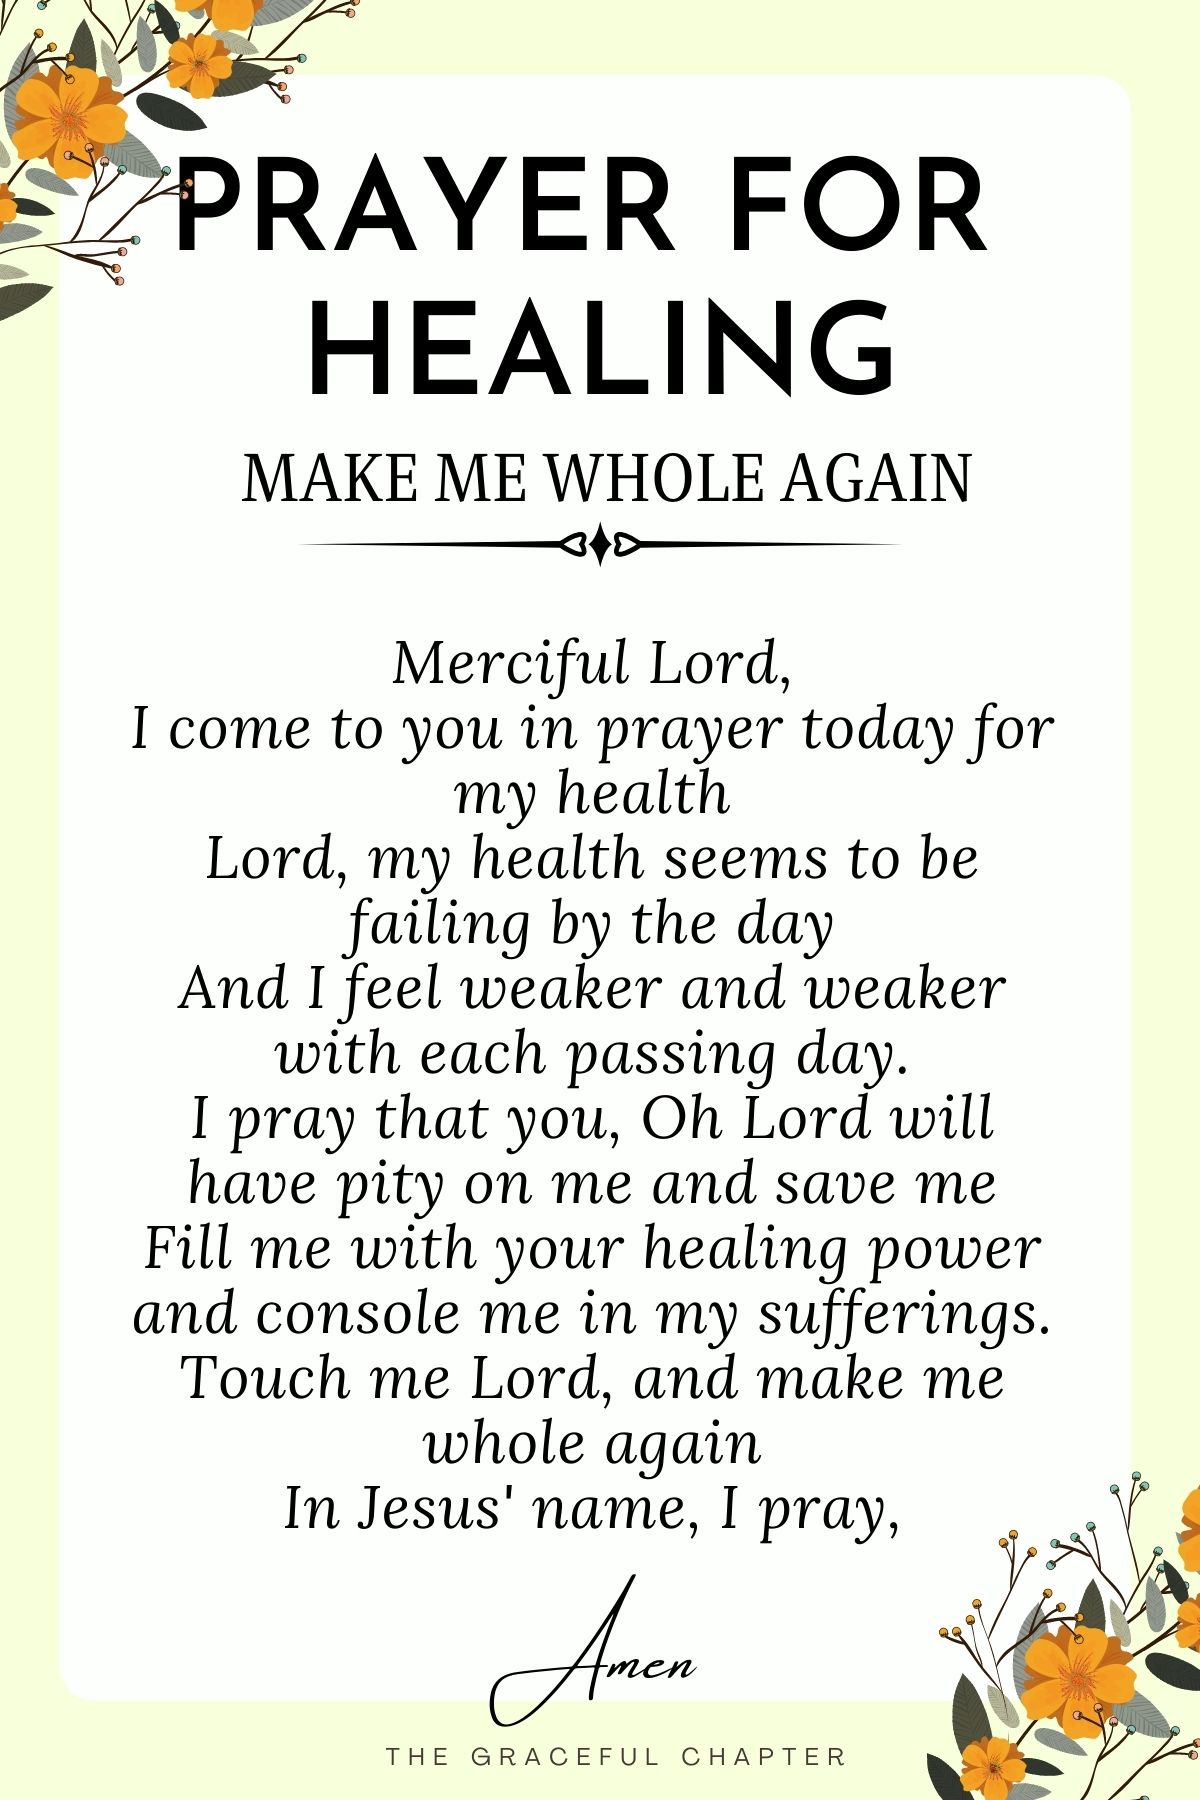 Prayer for healing - Make me whole again